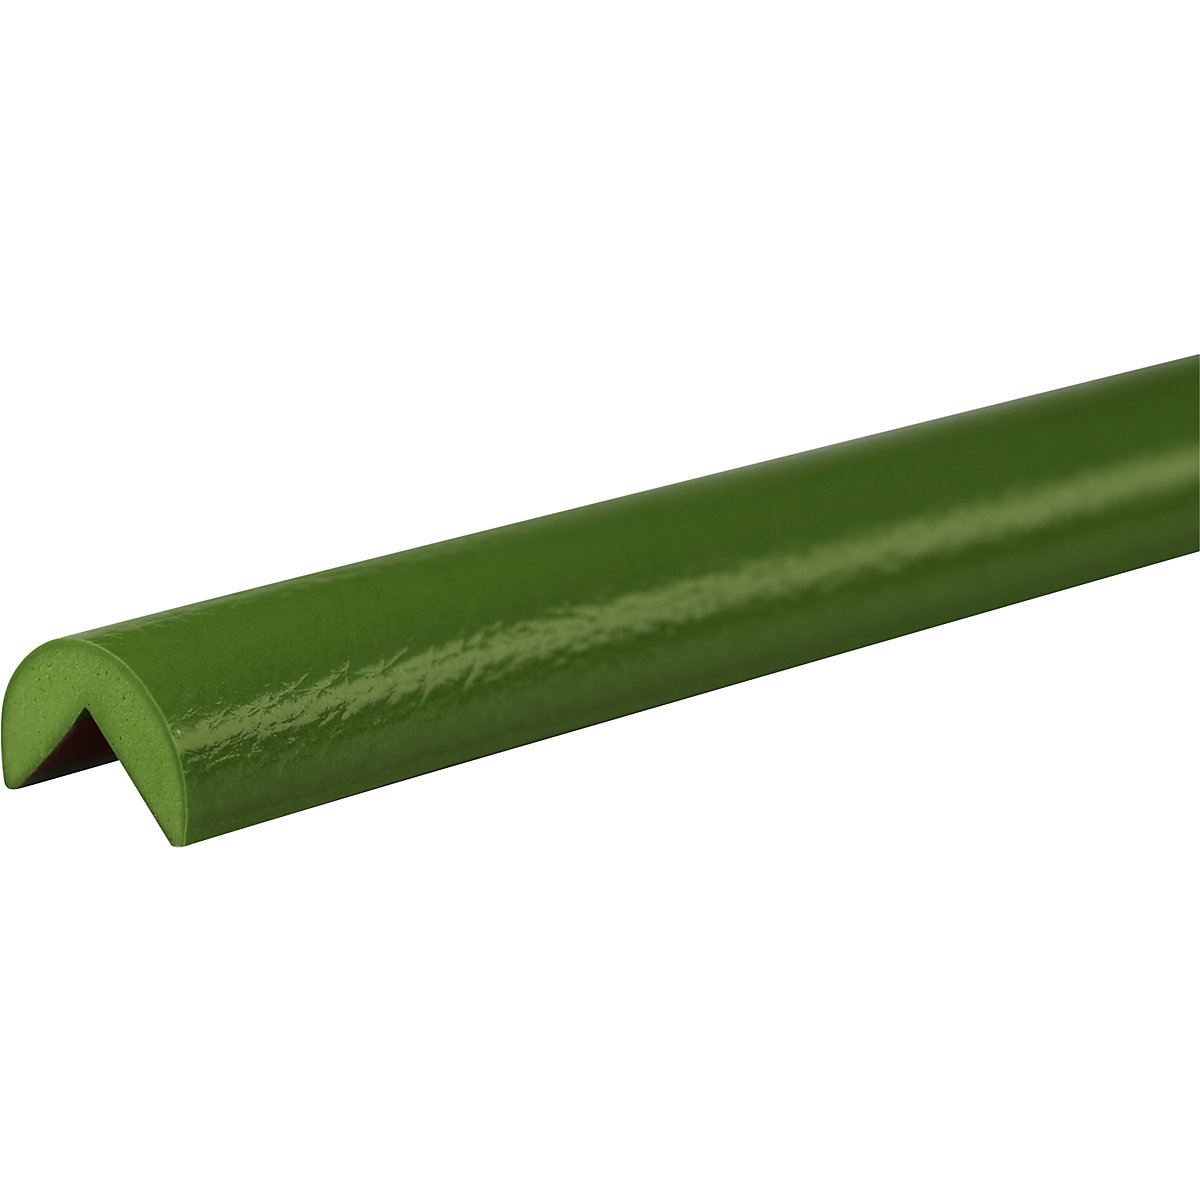 Zaščita vogalov Knuffi® – SHG, tip A, kos 1 m, zelene barve-19